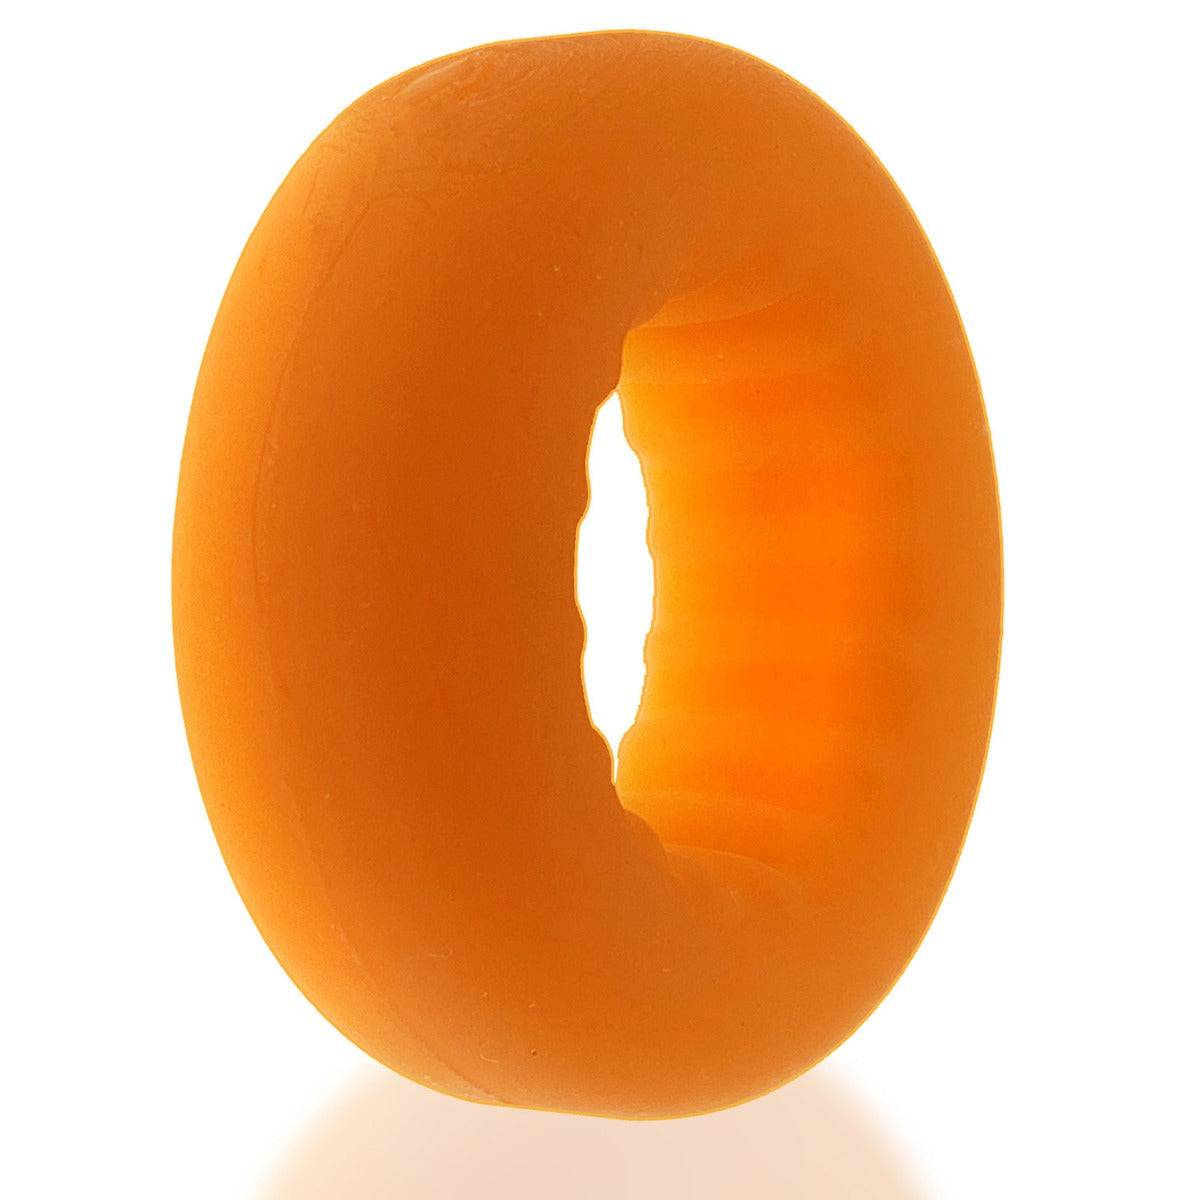 Oxballs Axis Rib Griphold Cock Ring Orange Ice - Simply Pleasure